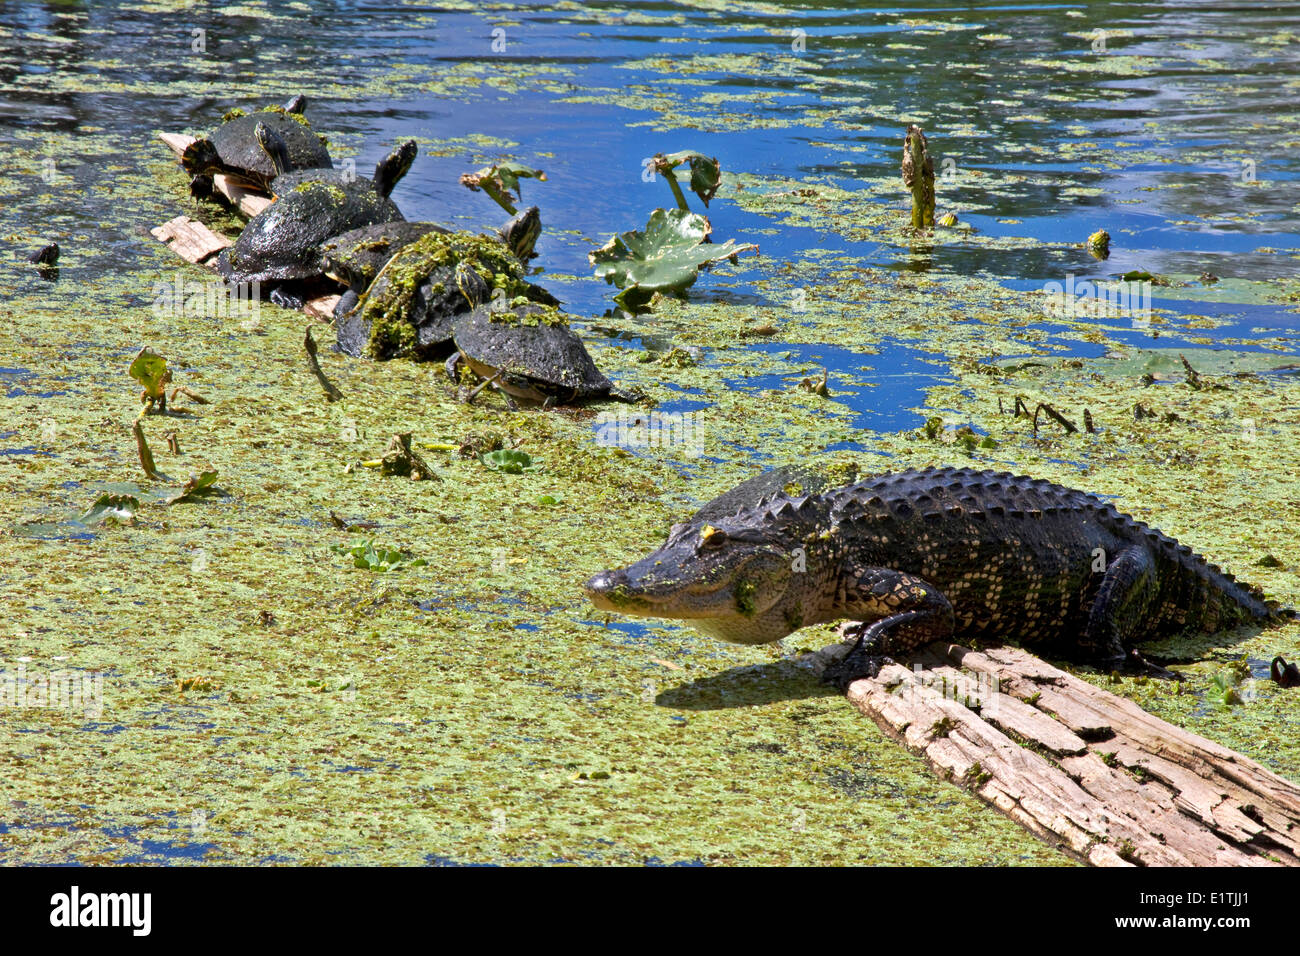 Alligators and Turtles, Lettuce Lake Park, Tampa, Florida Stock Photo